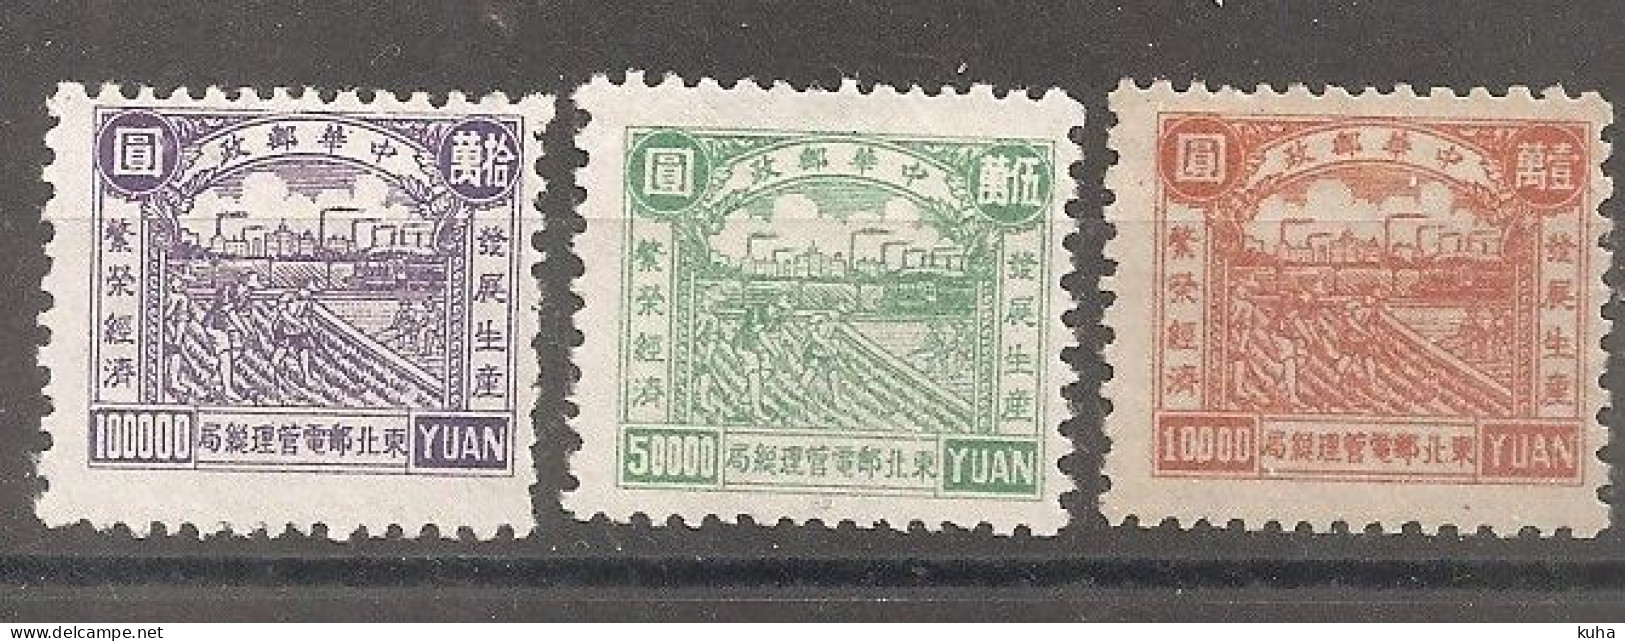 China Chine 1950 North China   MNH - Northern China 1949-50